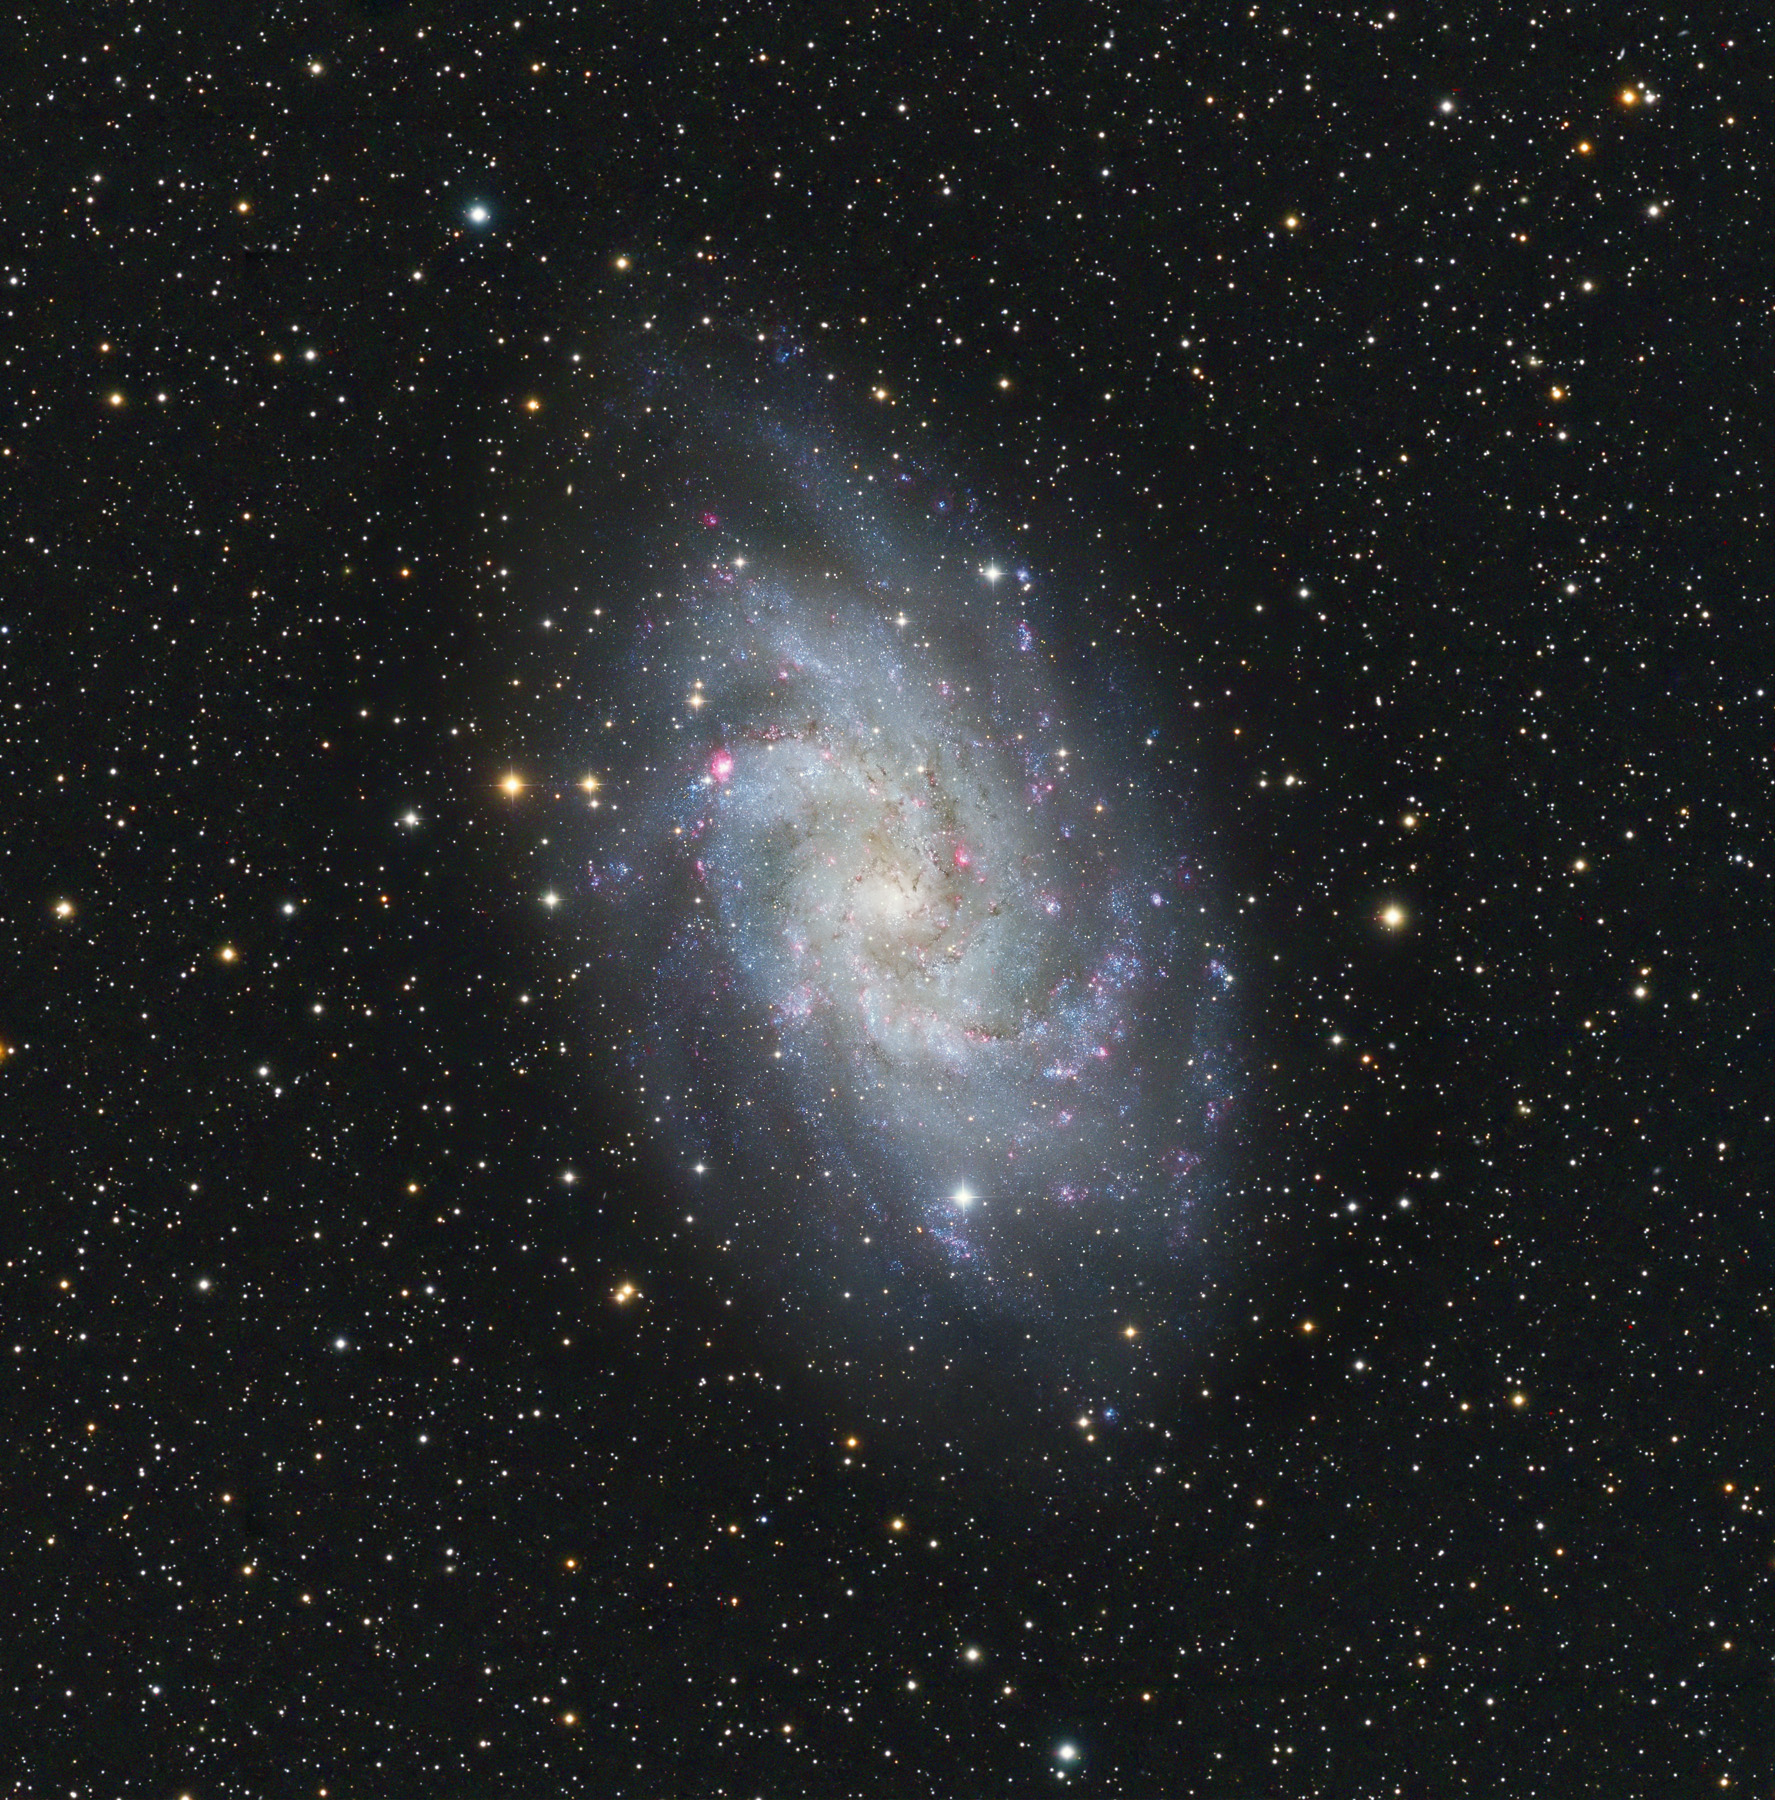 m33 The Triangulum Galaxy. Photo Credit: Chris Hetlage / Imaging the Cosmos